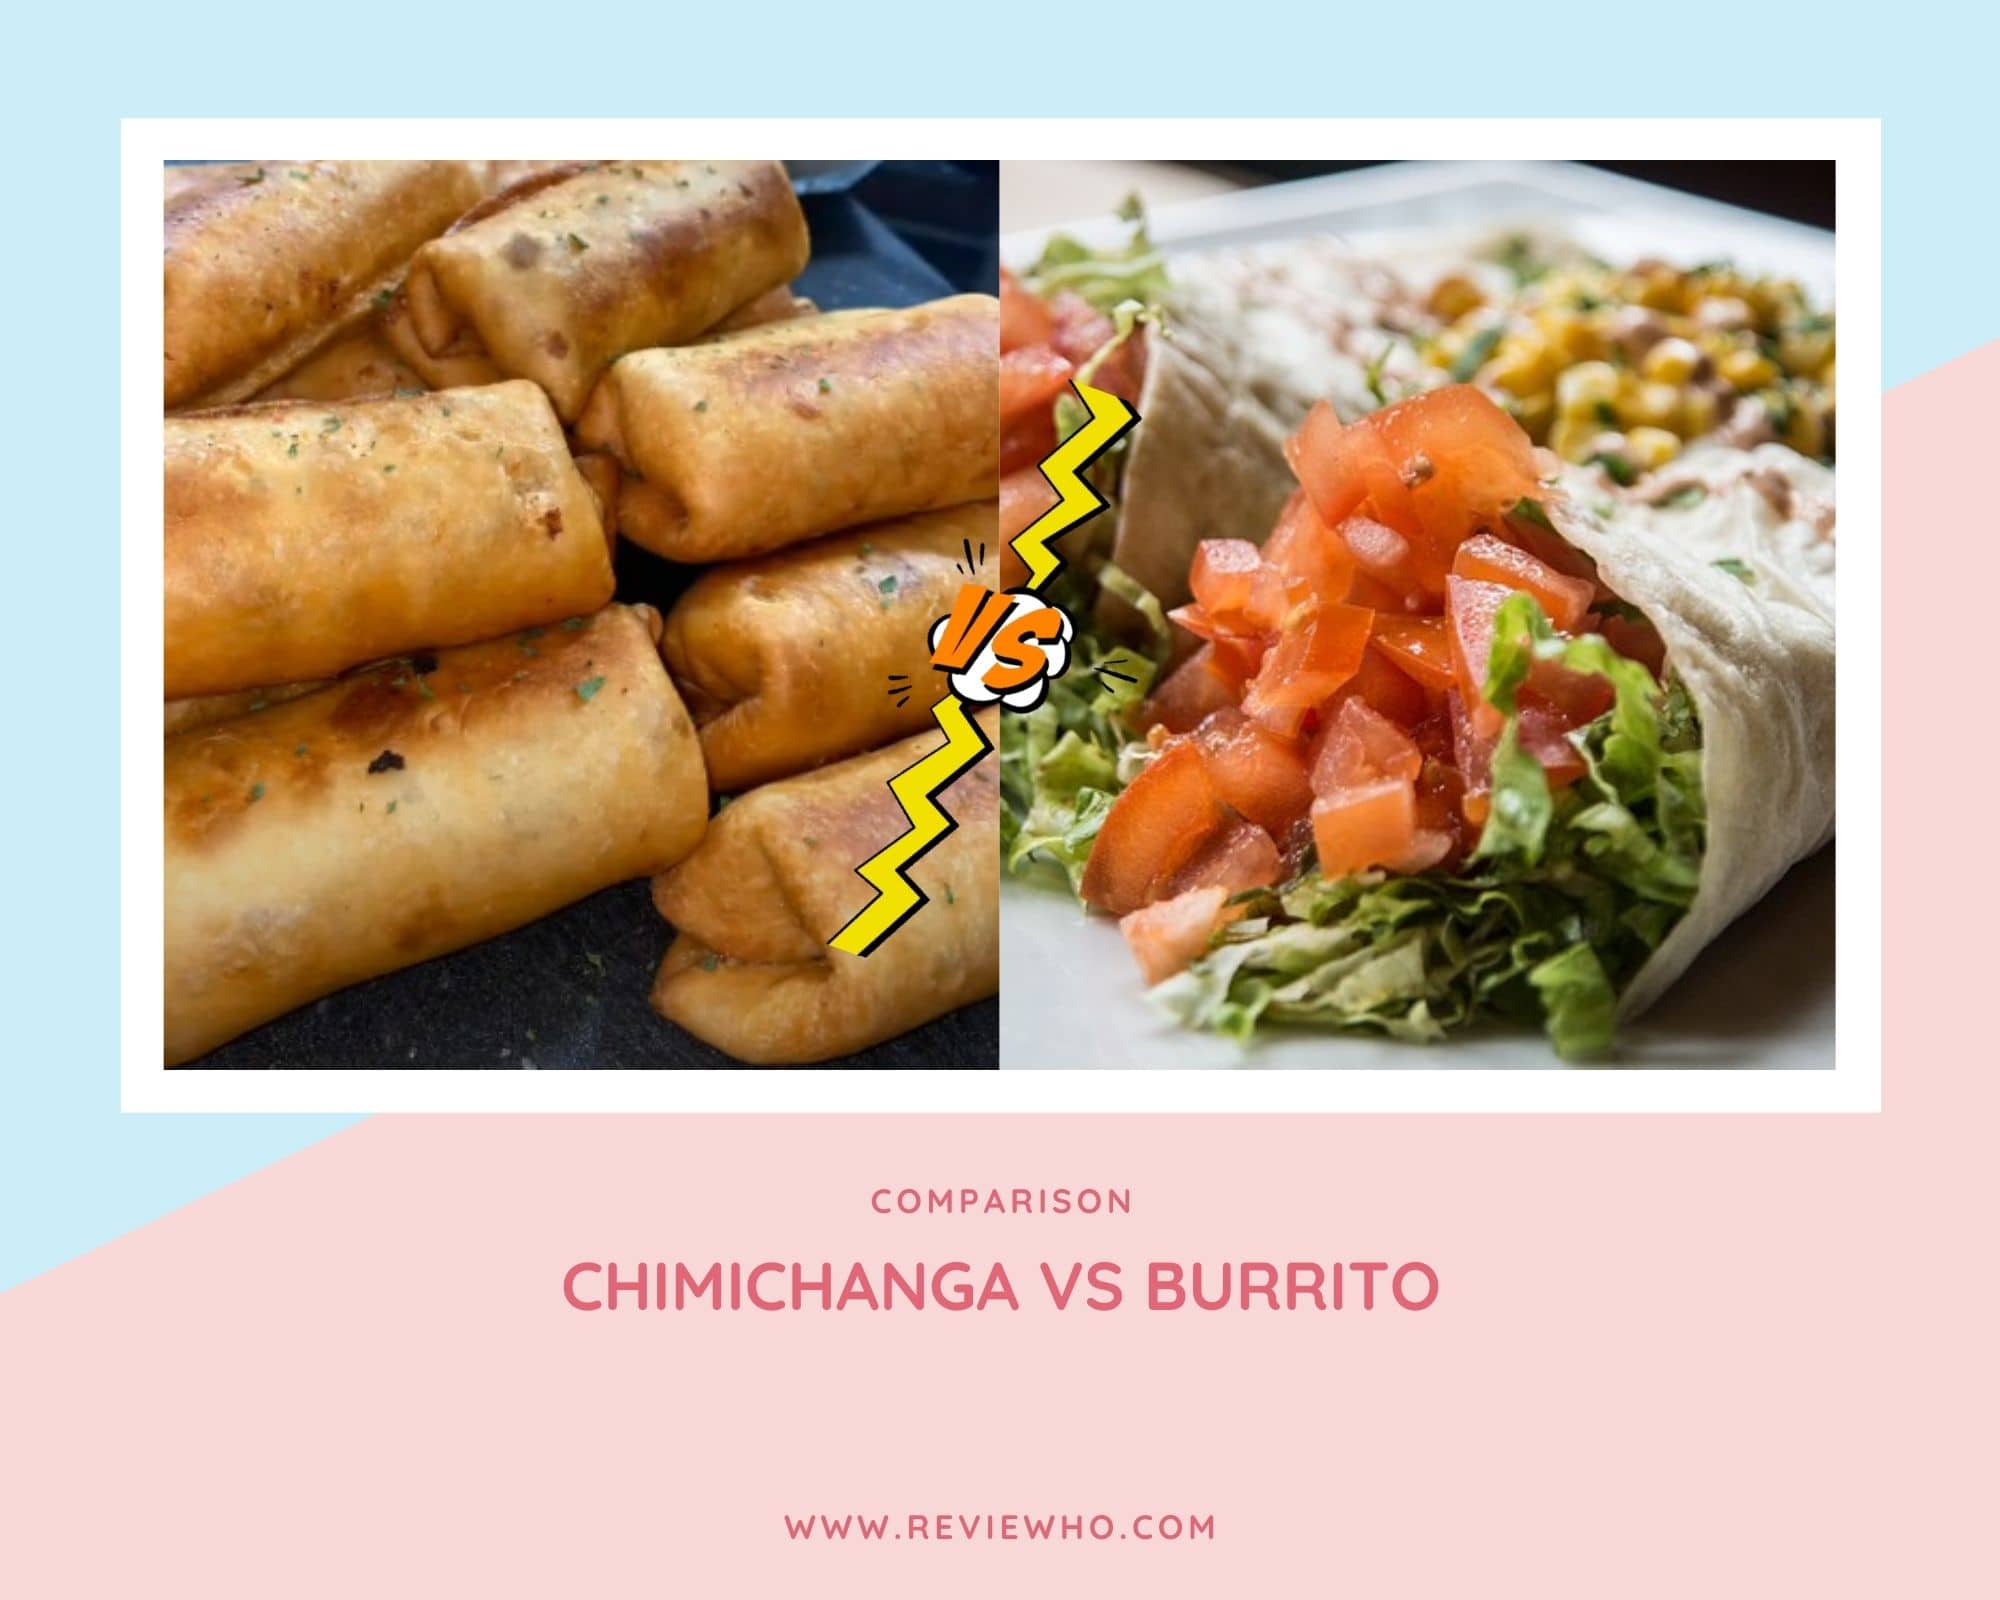 Chimichanga vs. Burrito comparison